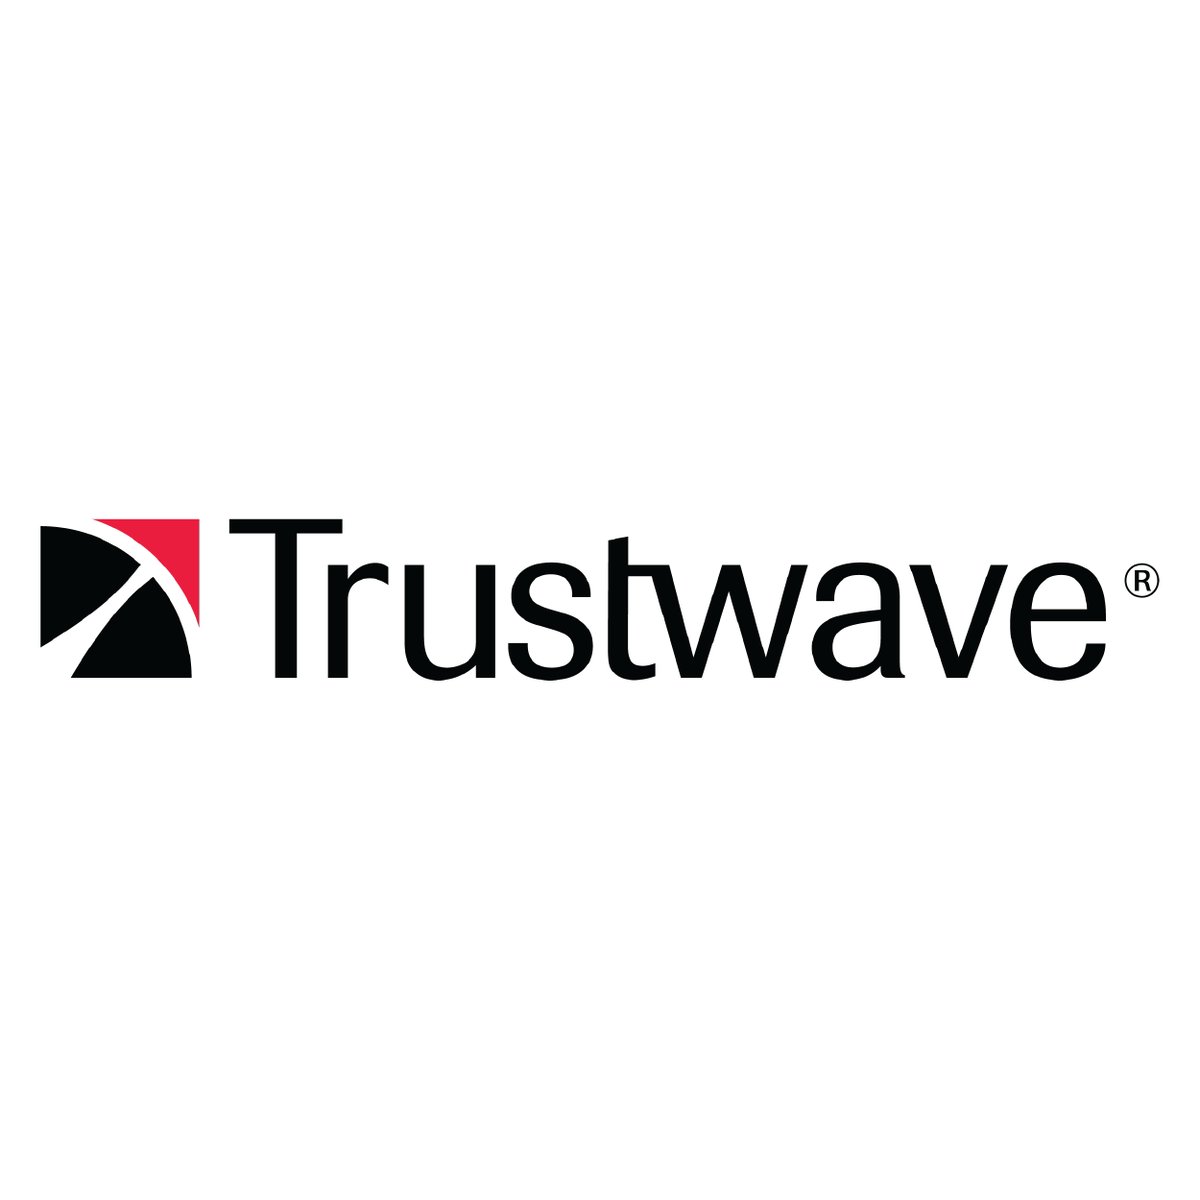 Trustwave-01